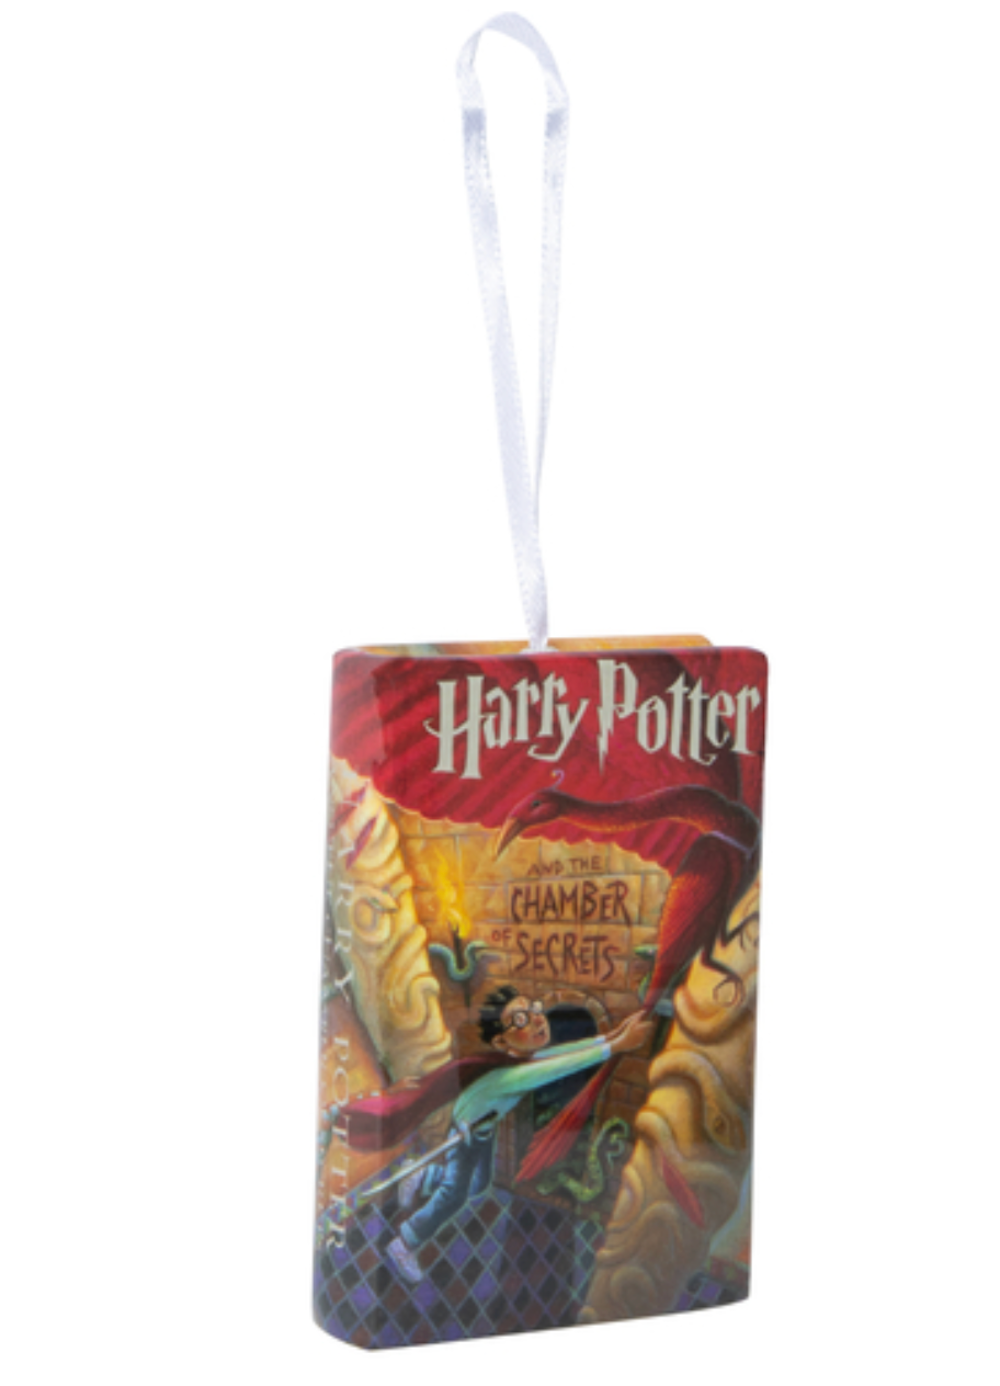 Hallmark Decoupage Harry Potter Chamber of Secrets Christmas Ornament New Tag